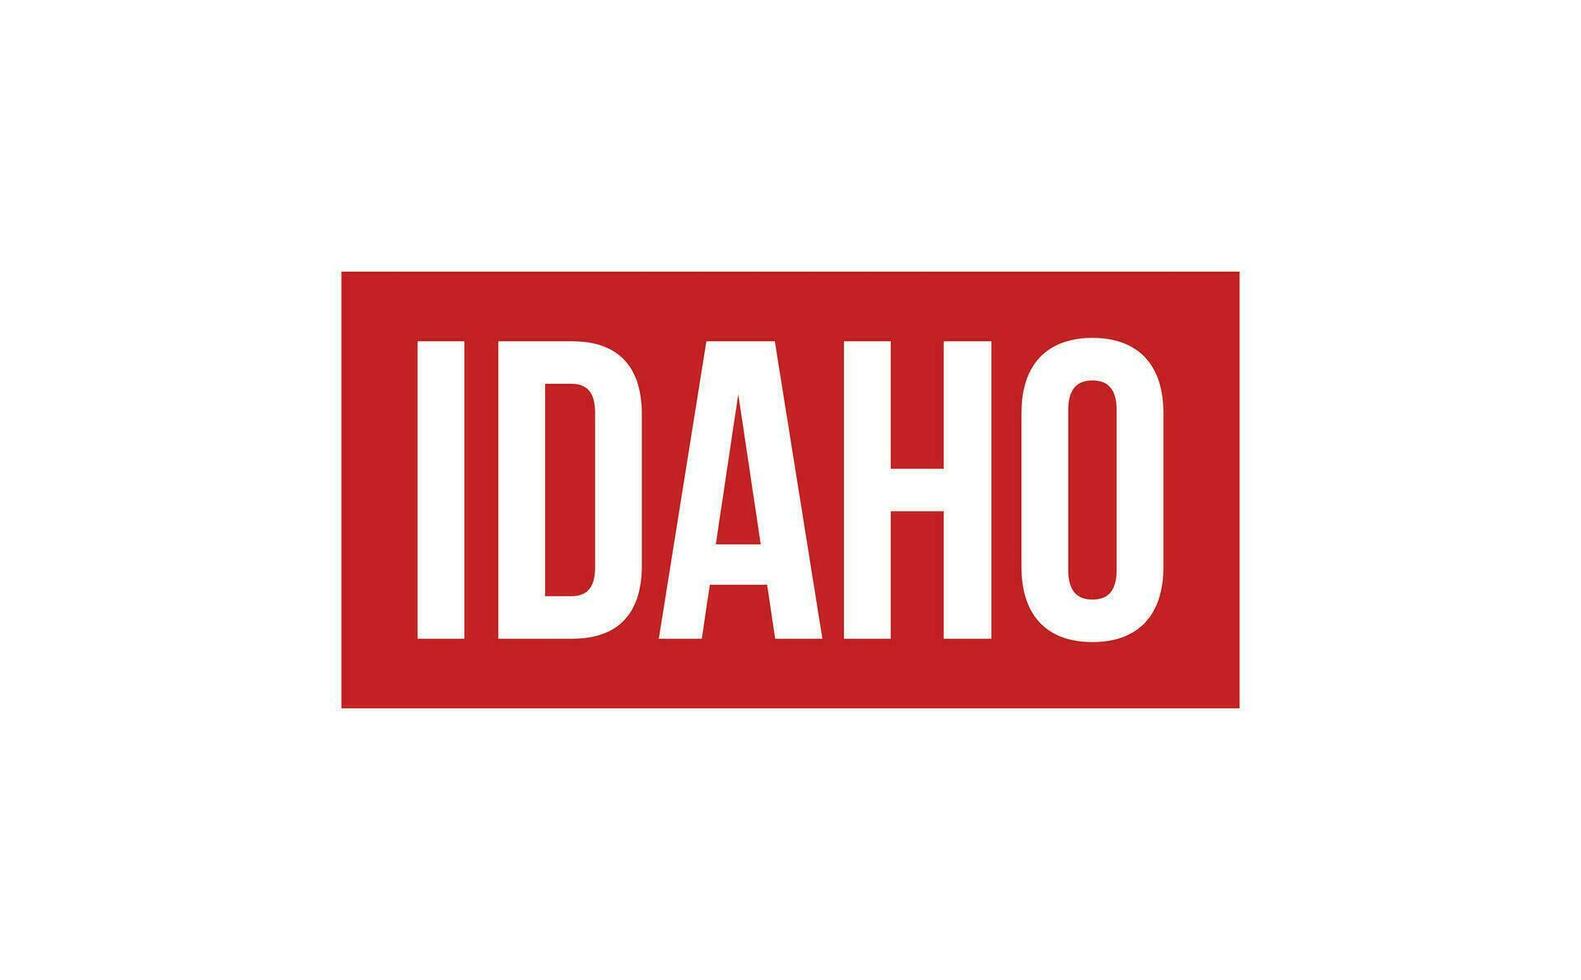 Idaho rubber postzegel zegel vector